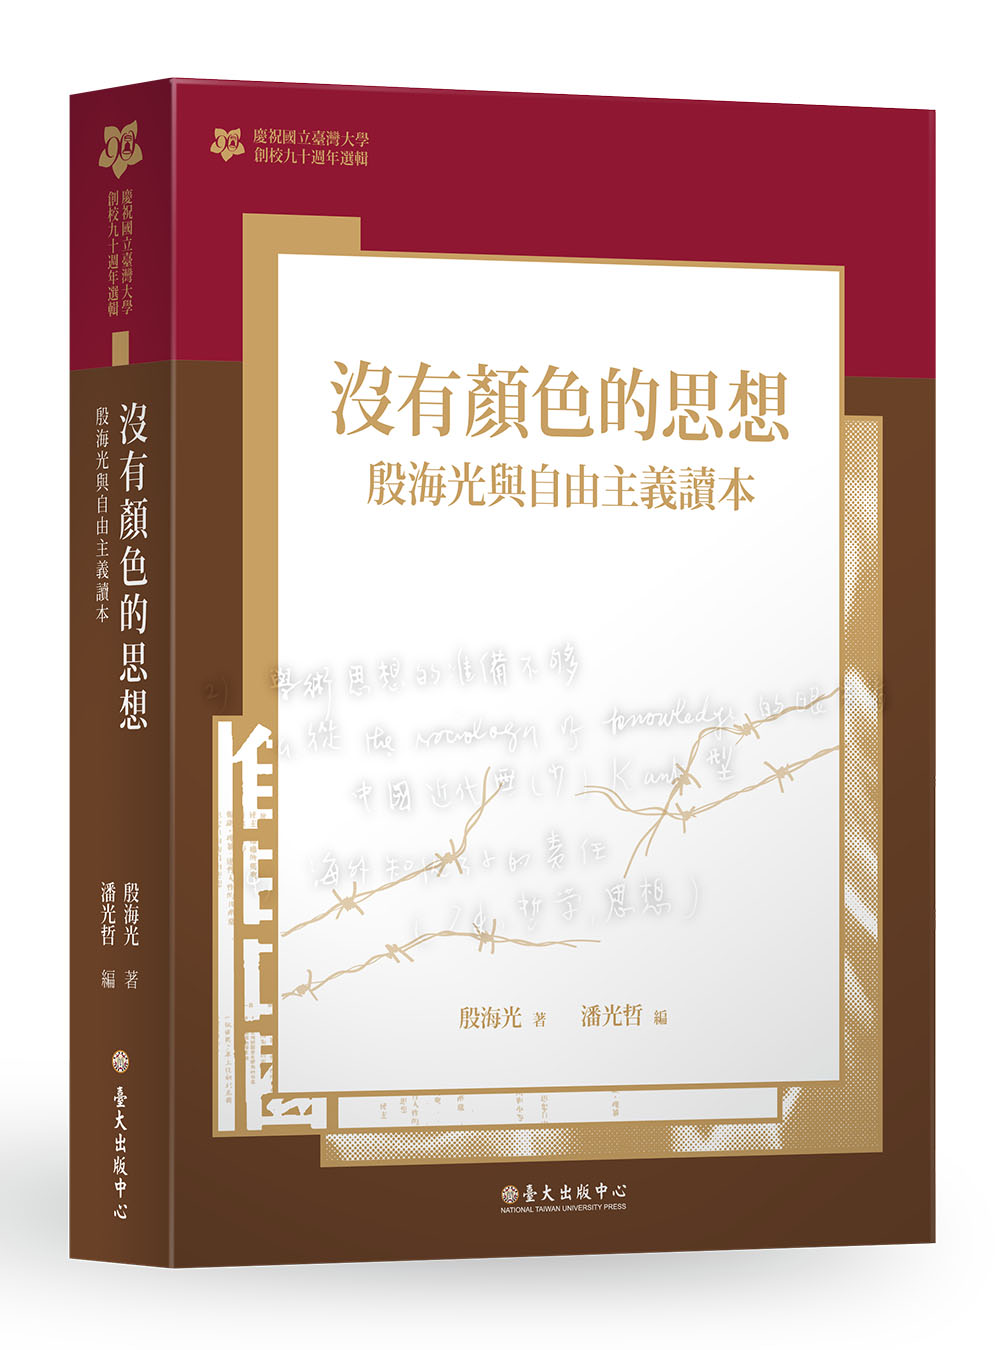 Yin Hai-Kuang and Liberalism: An Introductory Reader